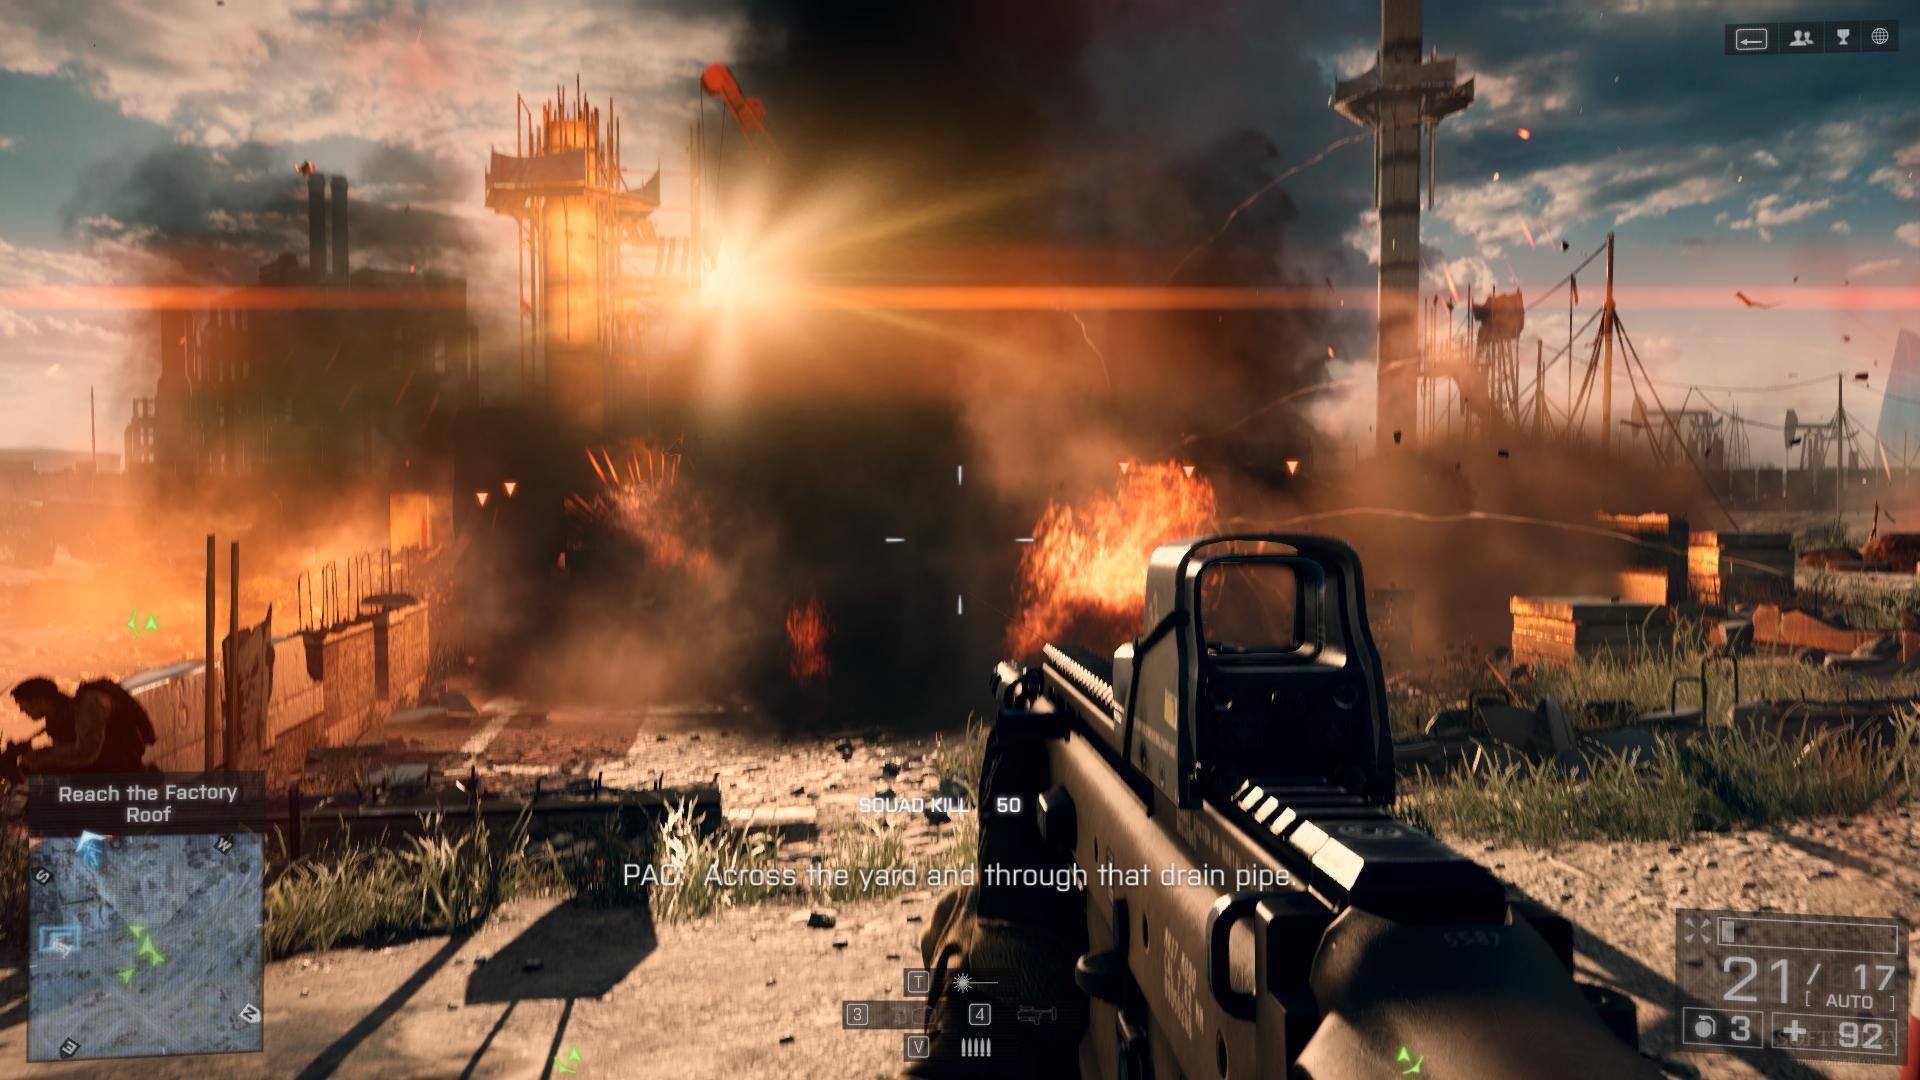 Battlefield 4 – review, Games